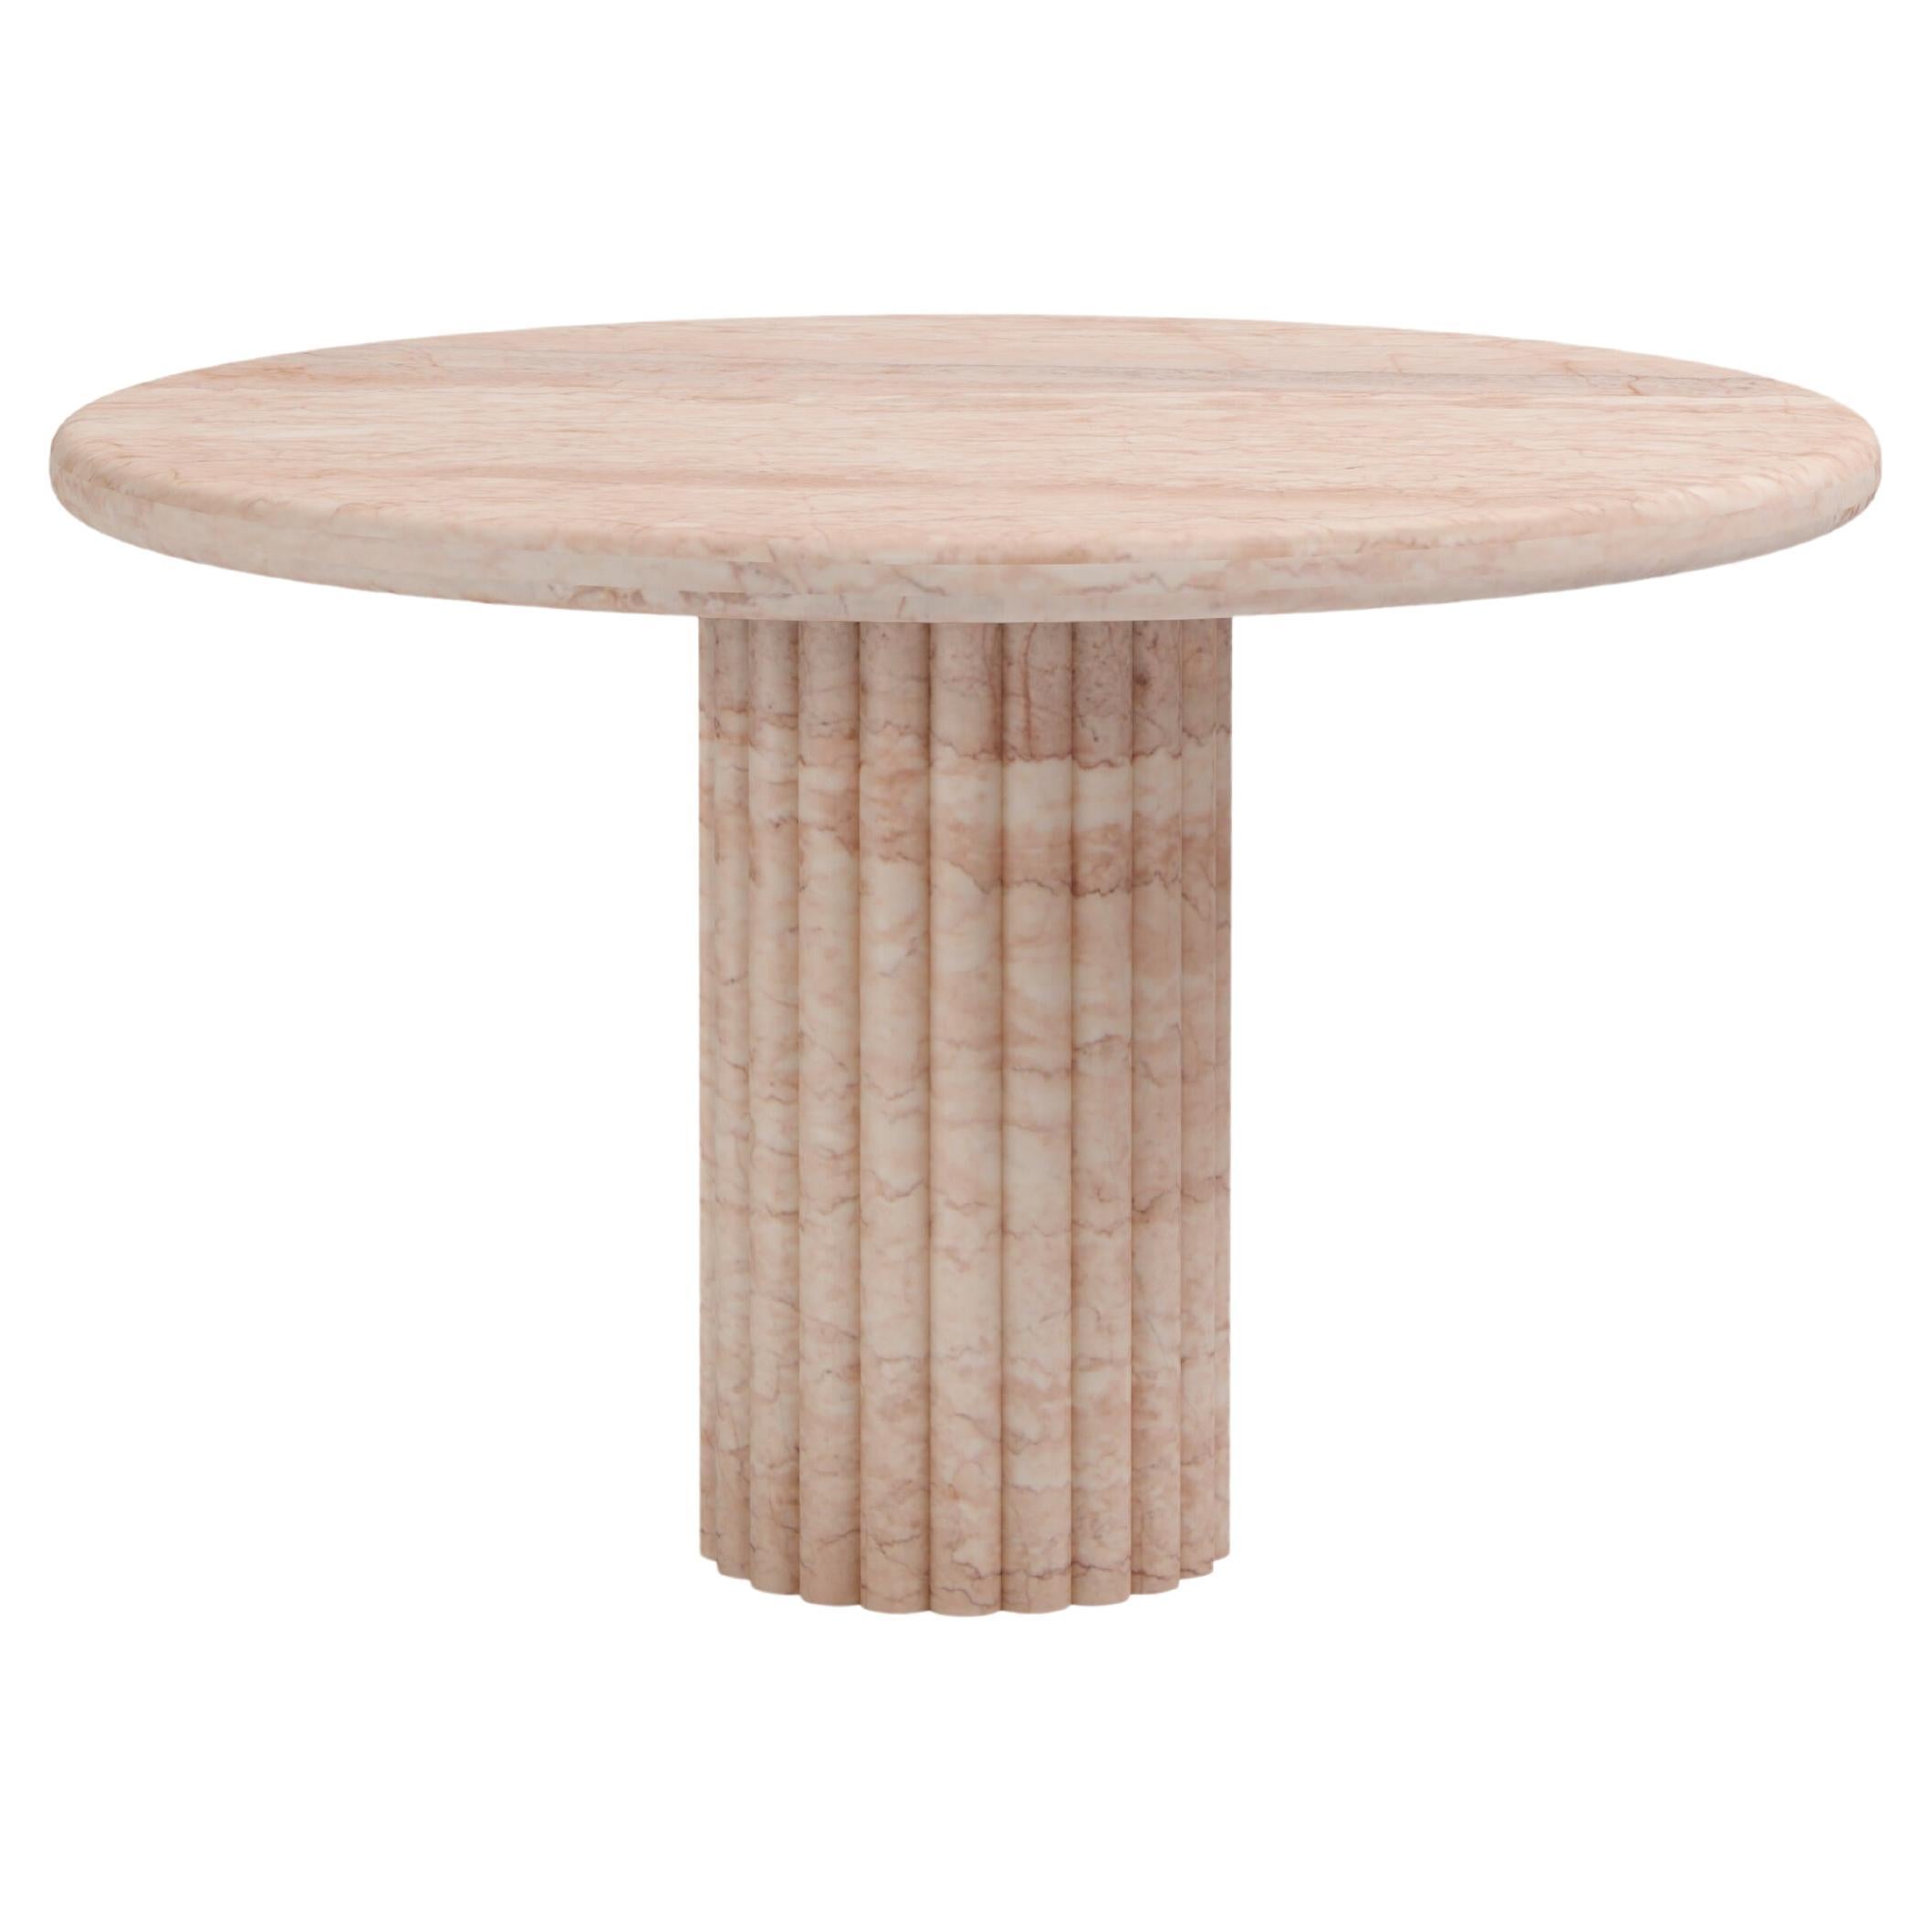 FORM(LA) Fluta Round Dining Table 42”L x 42”W x 30”H Rosa Crema Marble